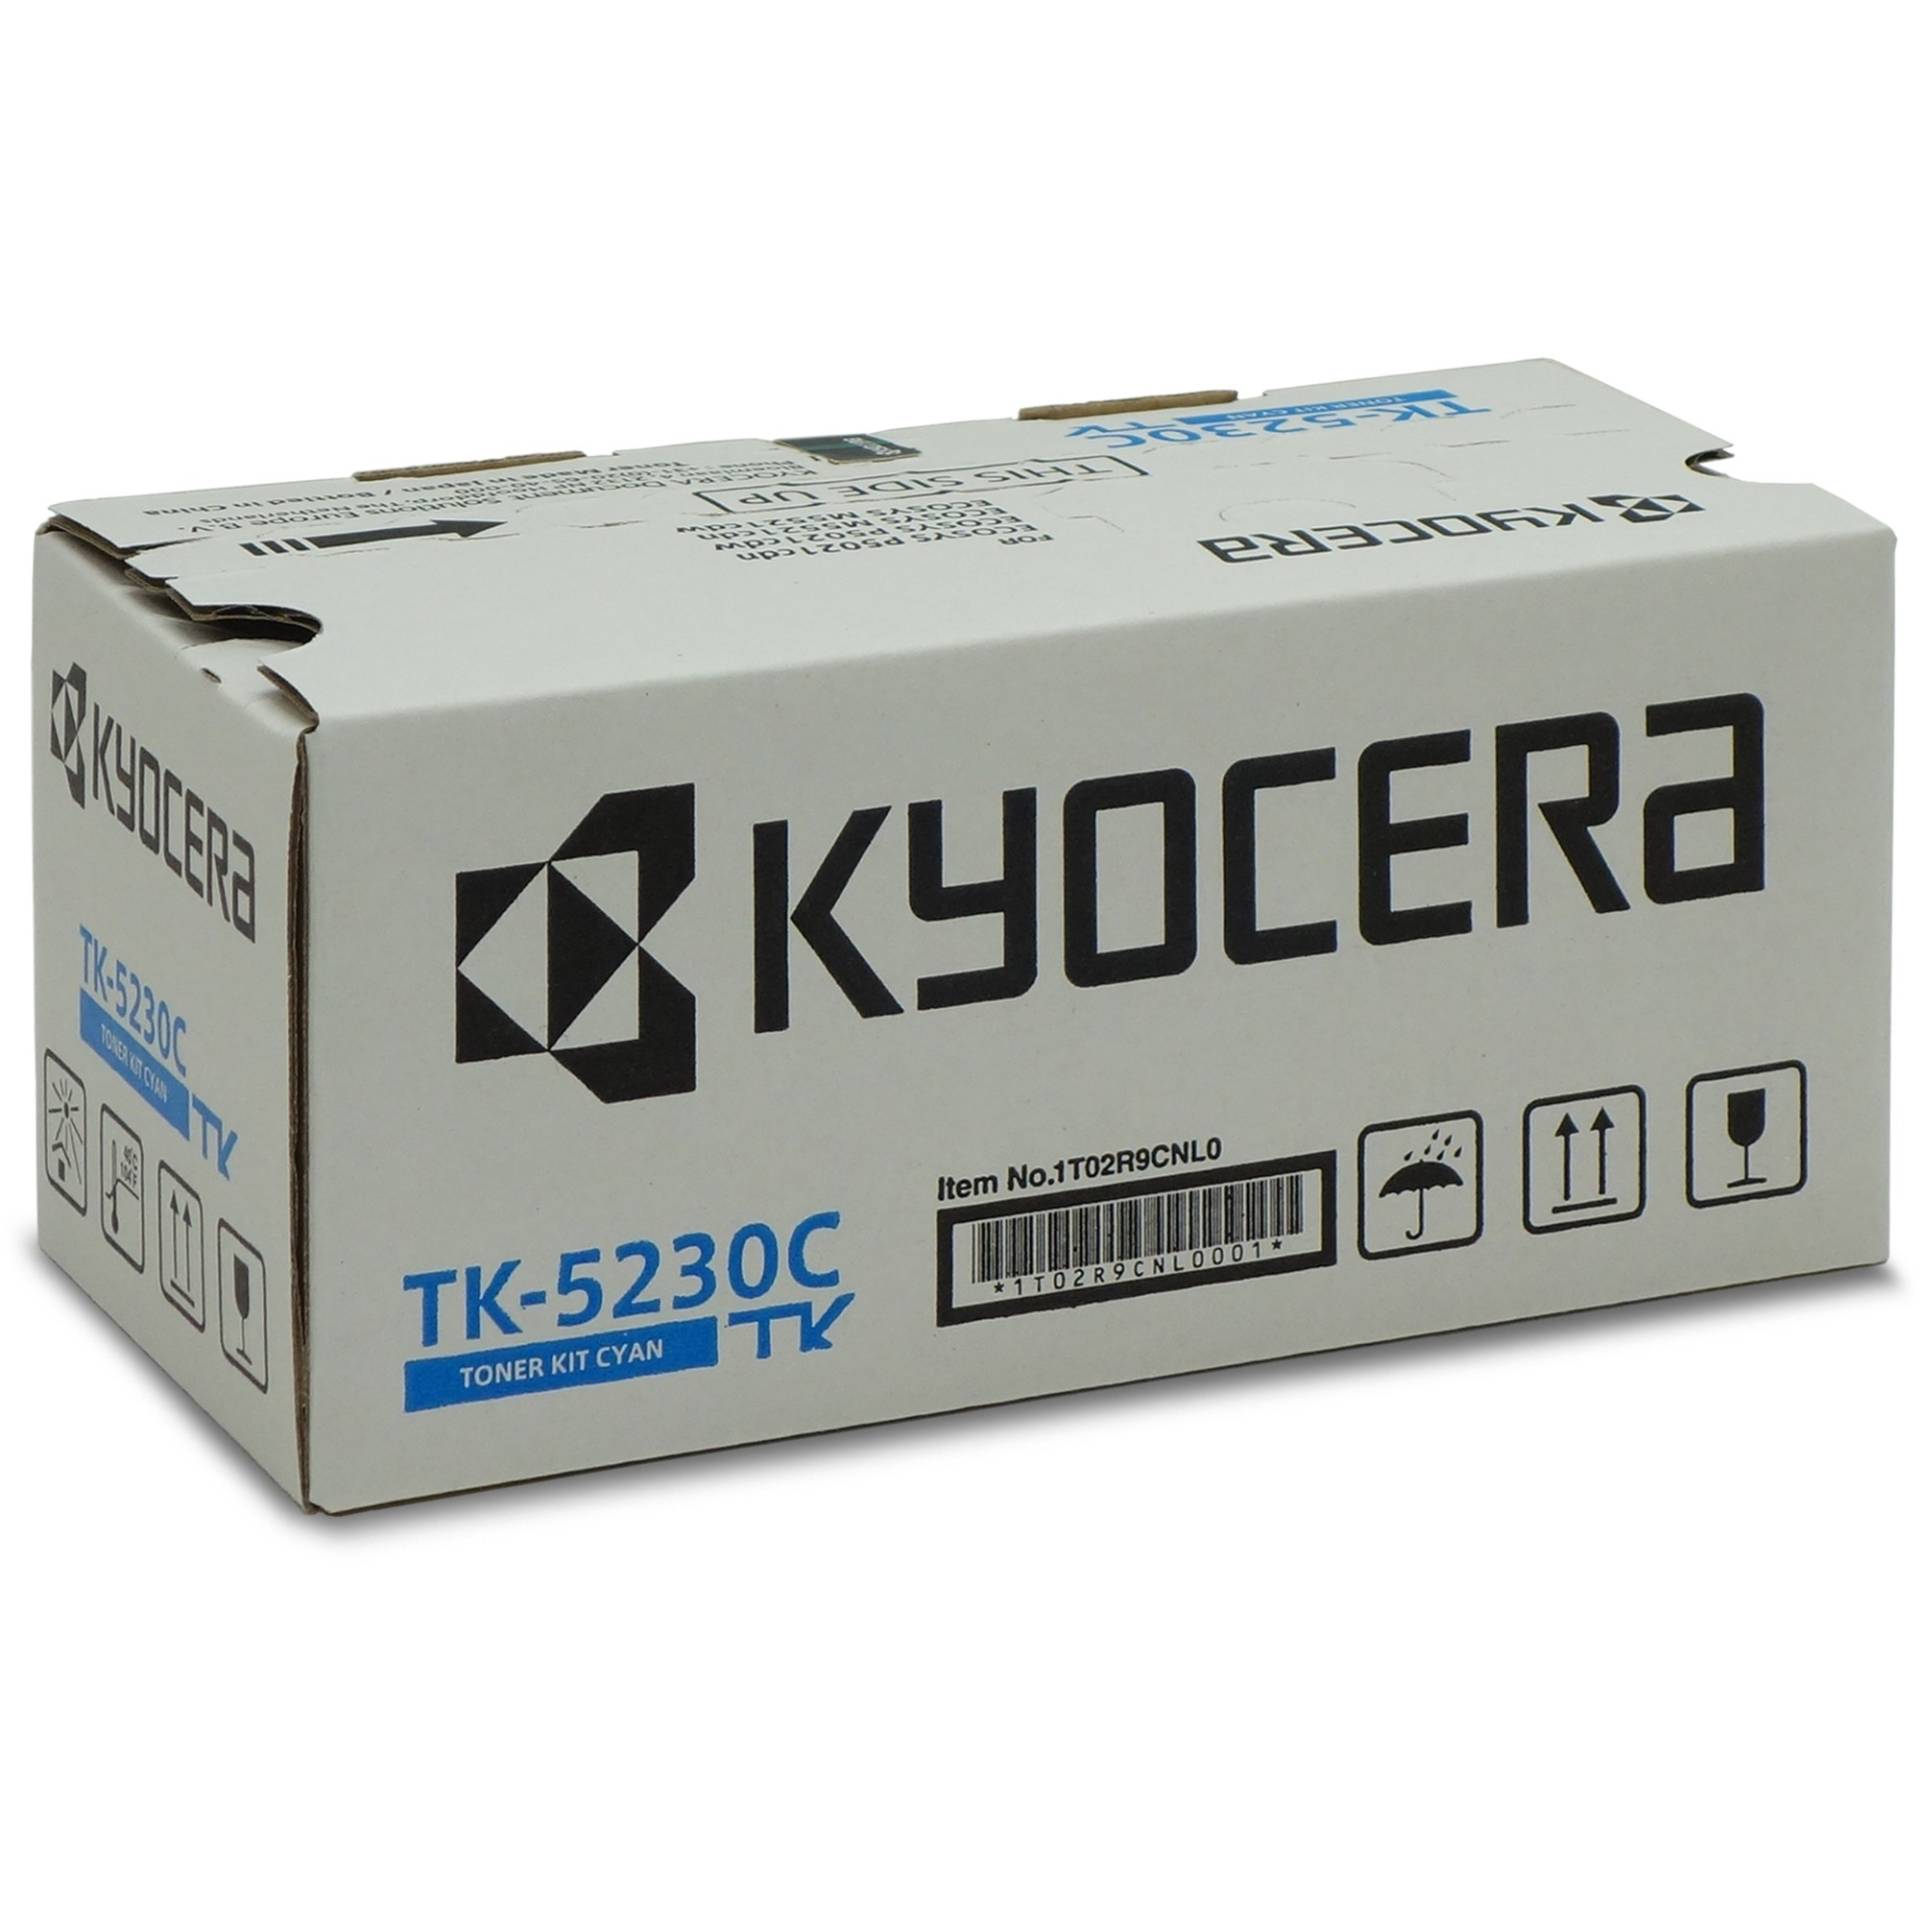 Toner cyan TK-5230C von Kyocera